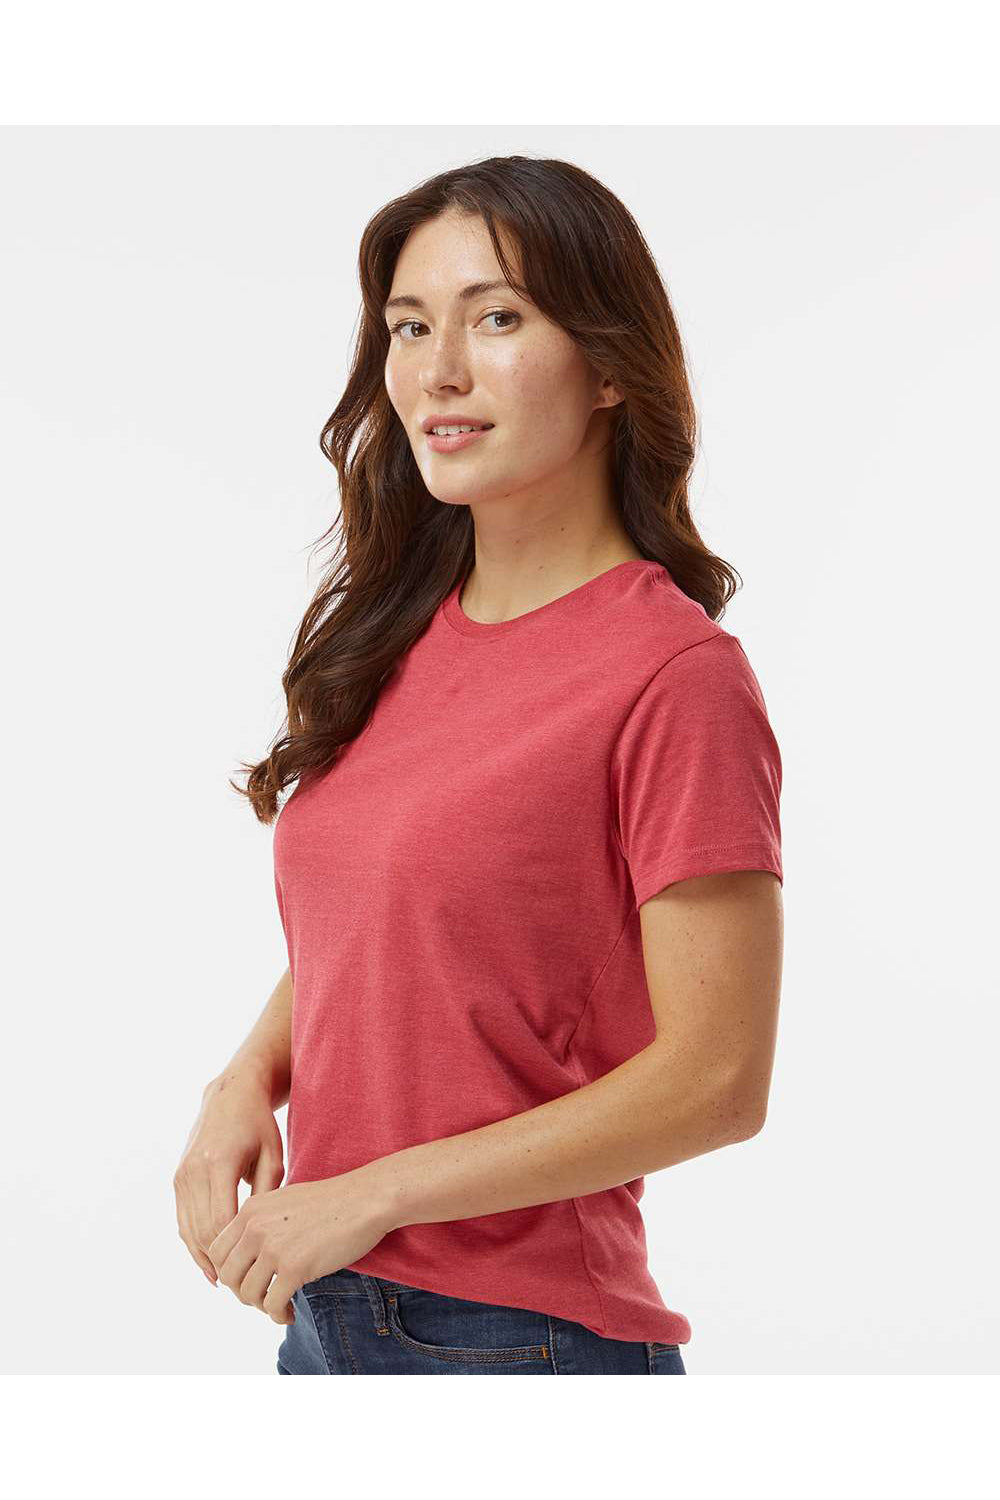 Kastlfel 2021 Womens RecycledSoft Short Sleeve Crewneck T-Shirt Red Model Side